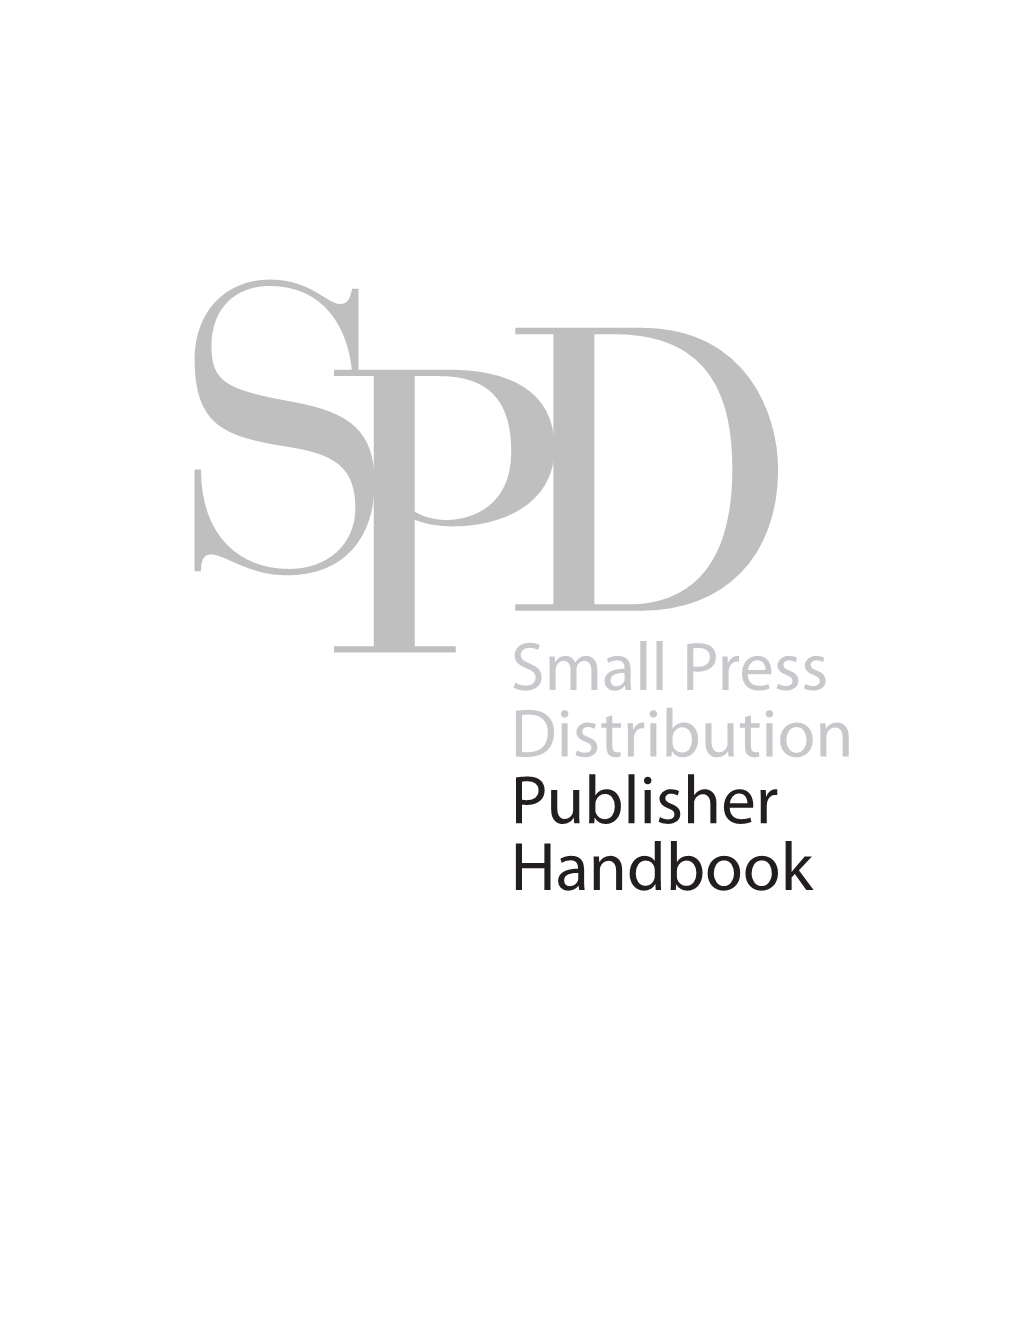 Small Press Distribution Publisher Handbook Contents